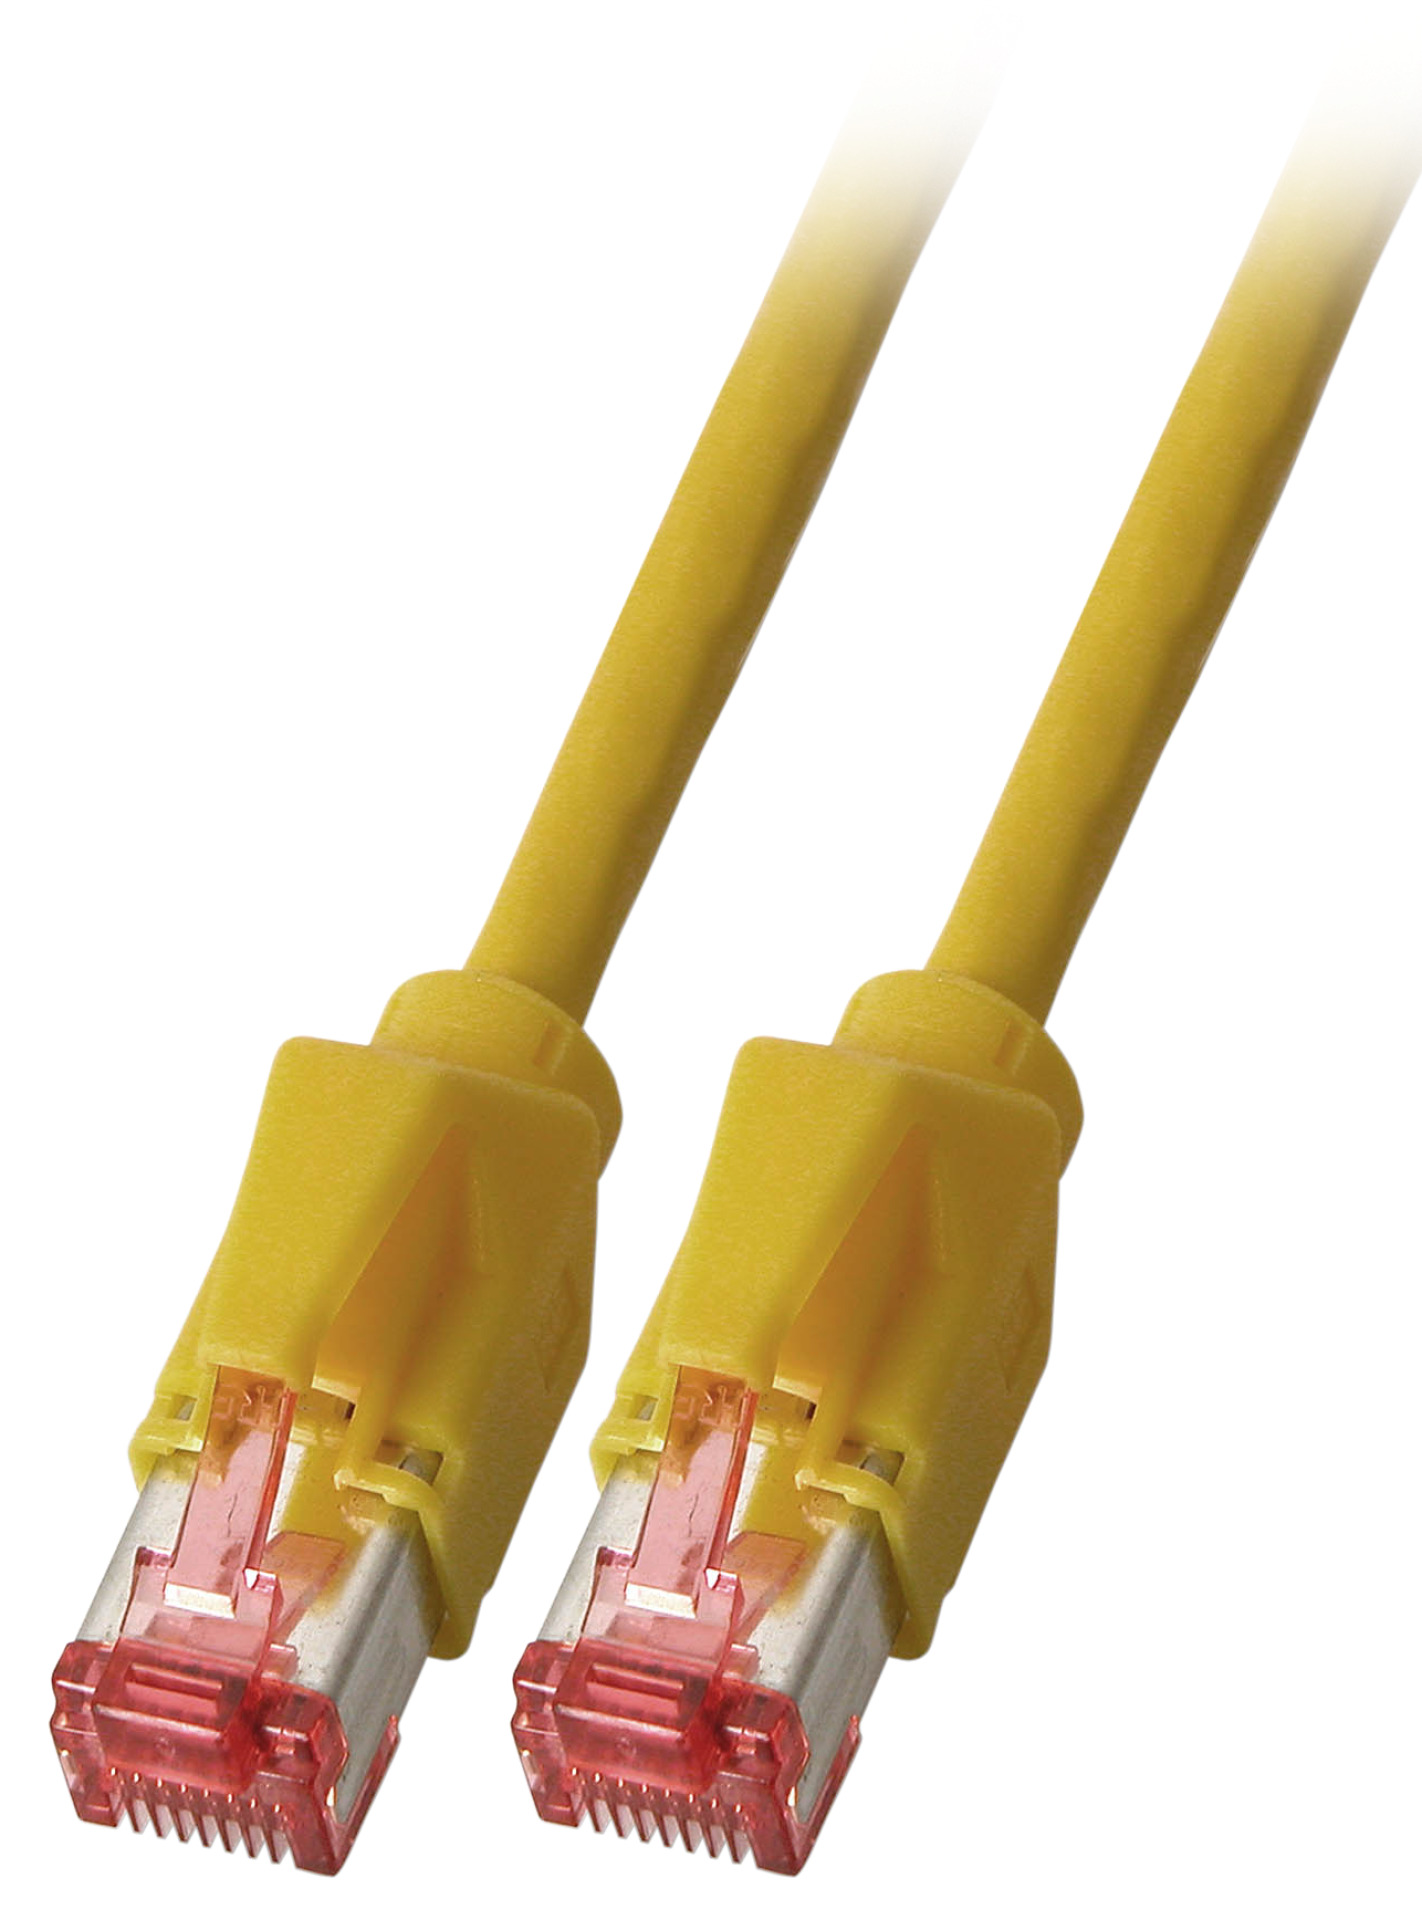 RJ45 Patch cable S/FTP, Cat.6A, TM21, Dätwyler 7702, 0,5m, yellow